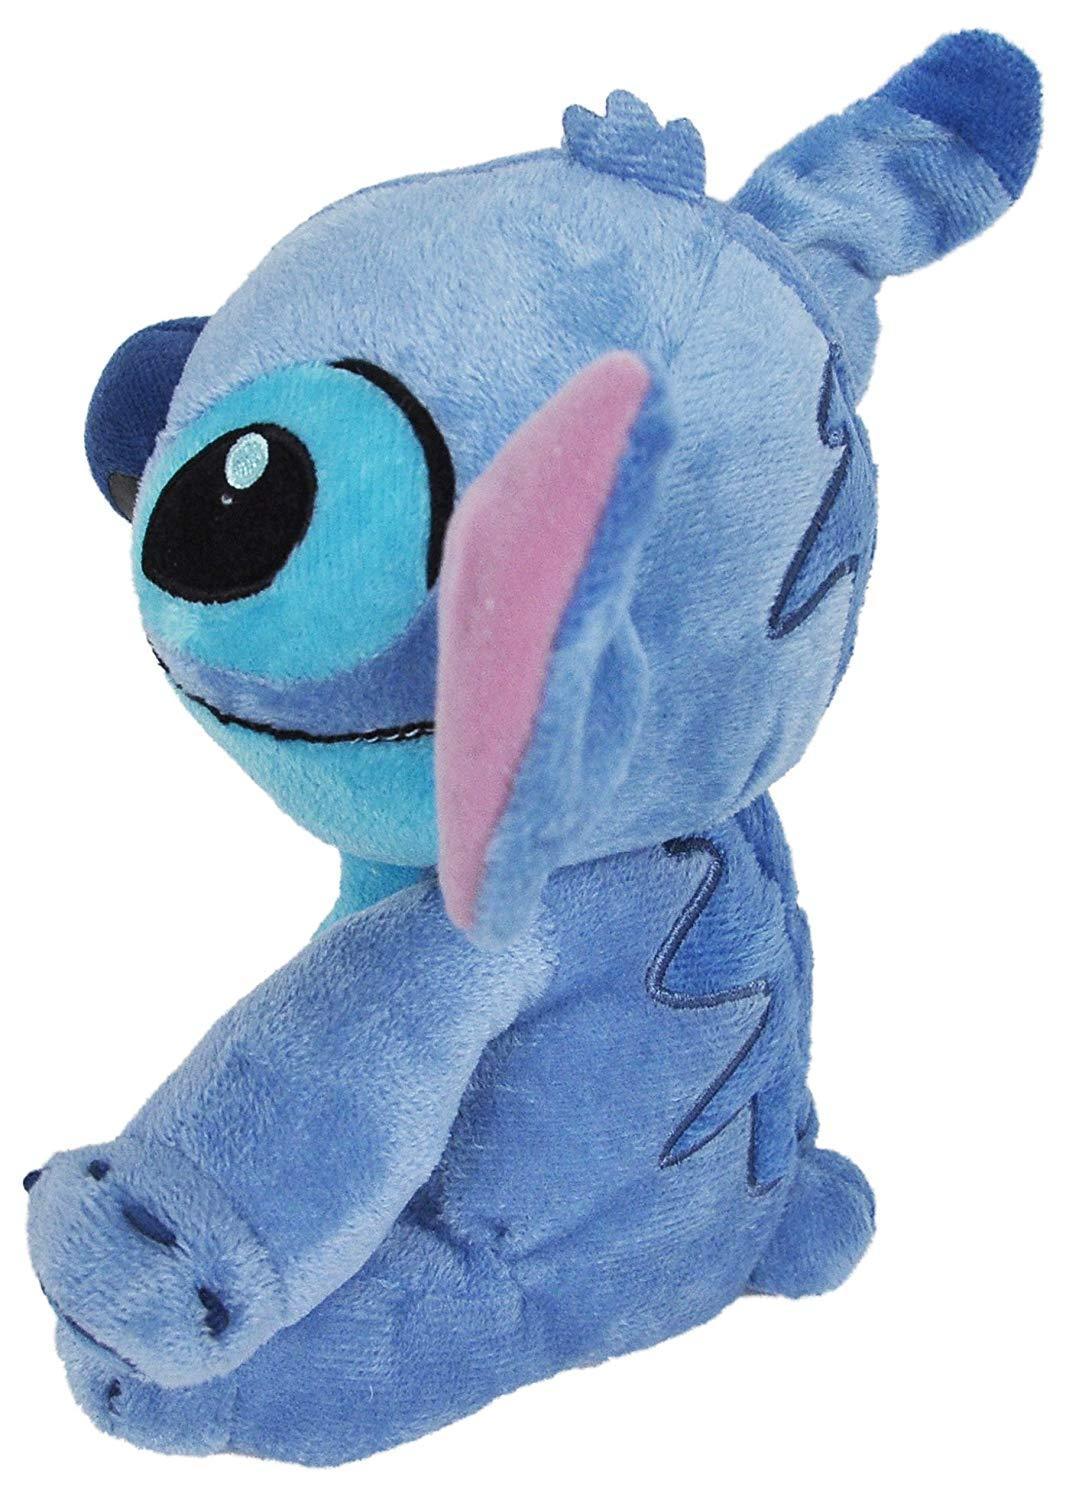 Disney Lilo and Stitch 7 Plush Stuffed Animal Doll - Blue Stitch